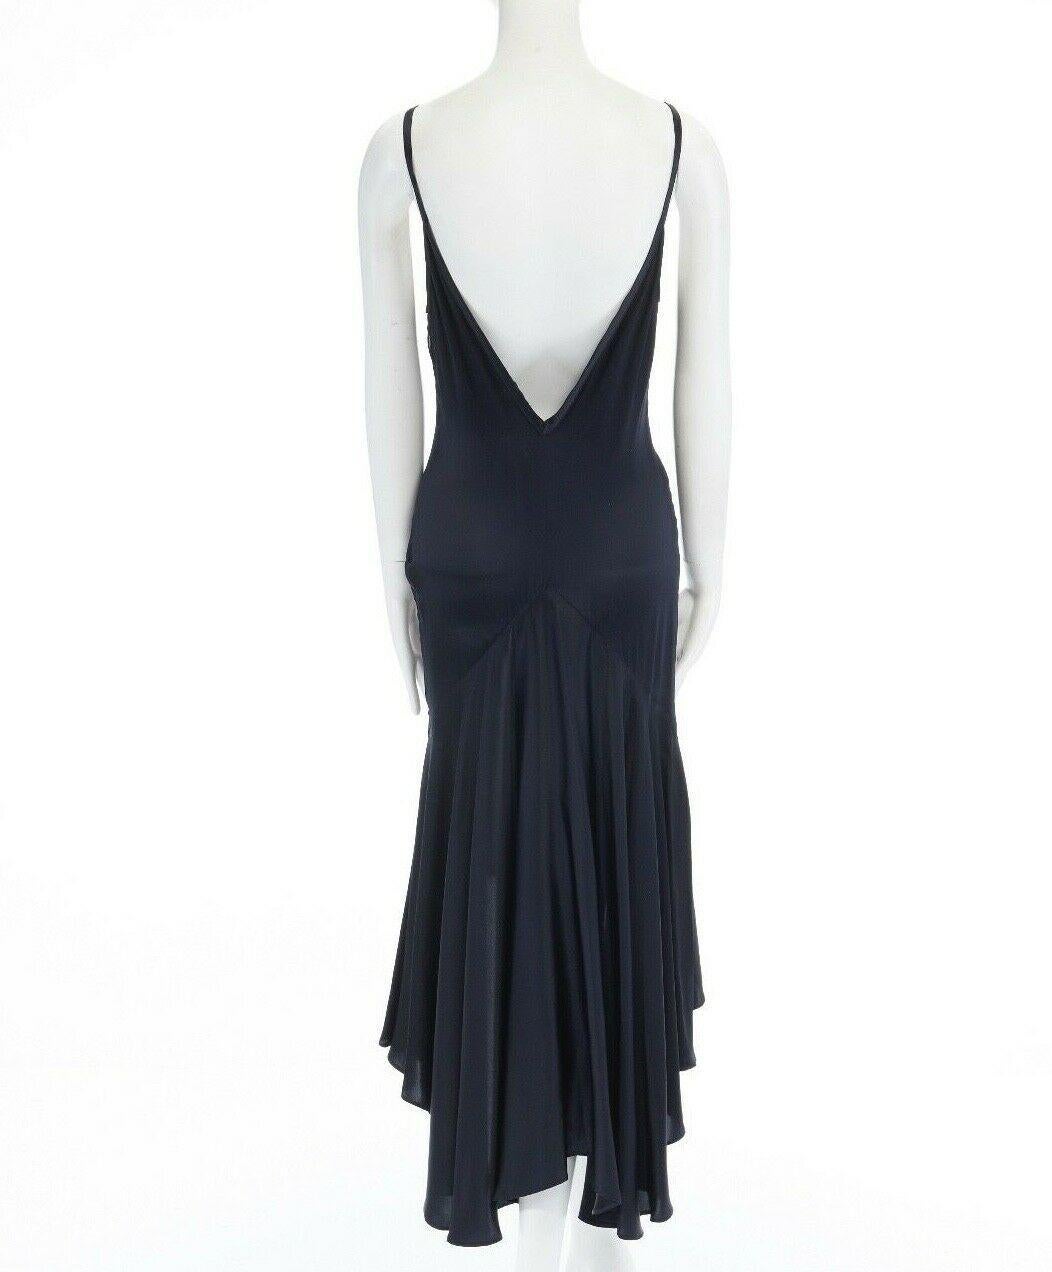 ALEXANDER MCQUEEN Vintage SS97 black sheer mesh bird silk dress M IT42 US6 1